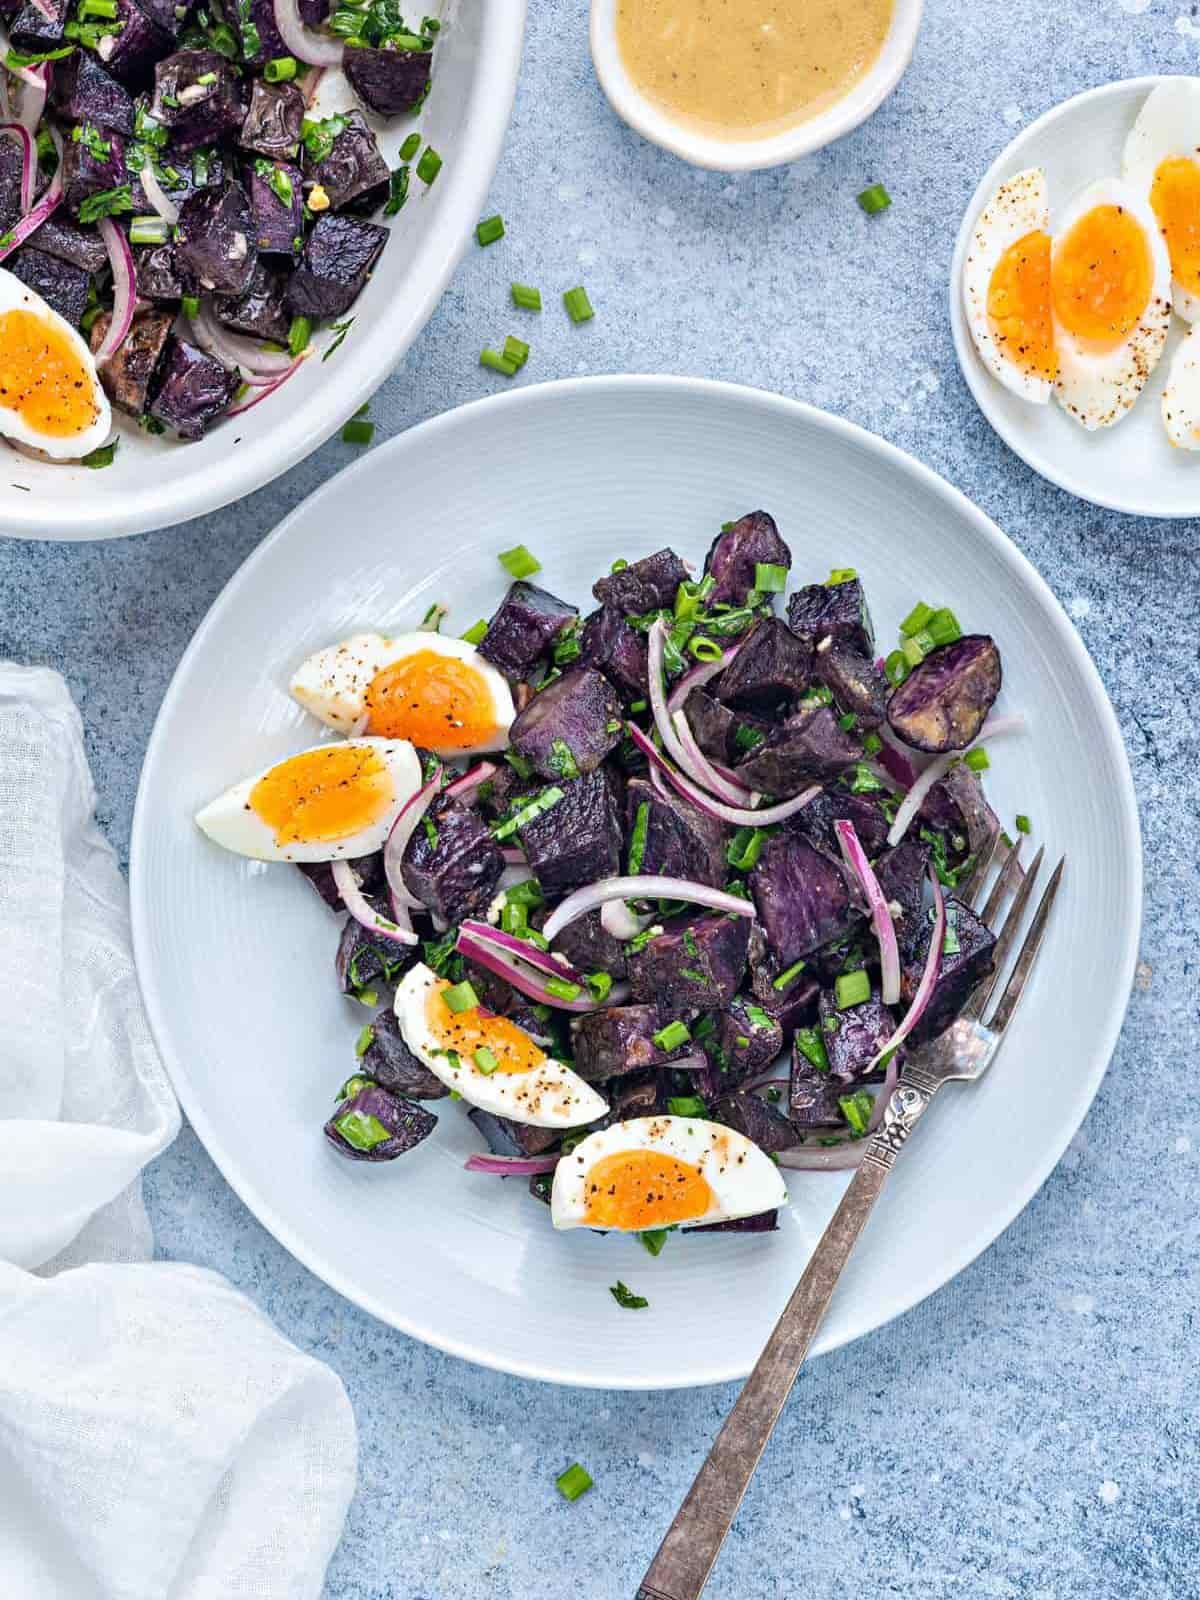 2 serves of purple potato salad with egg on a blue plate